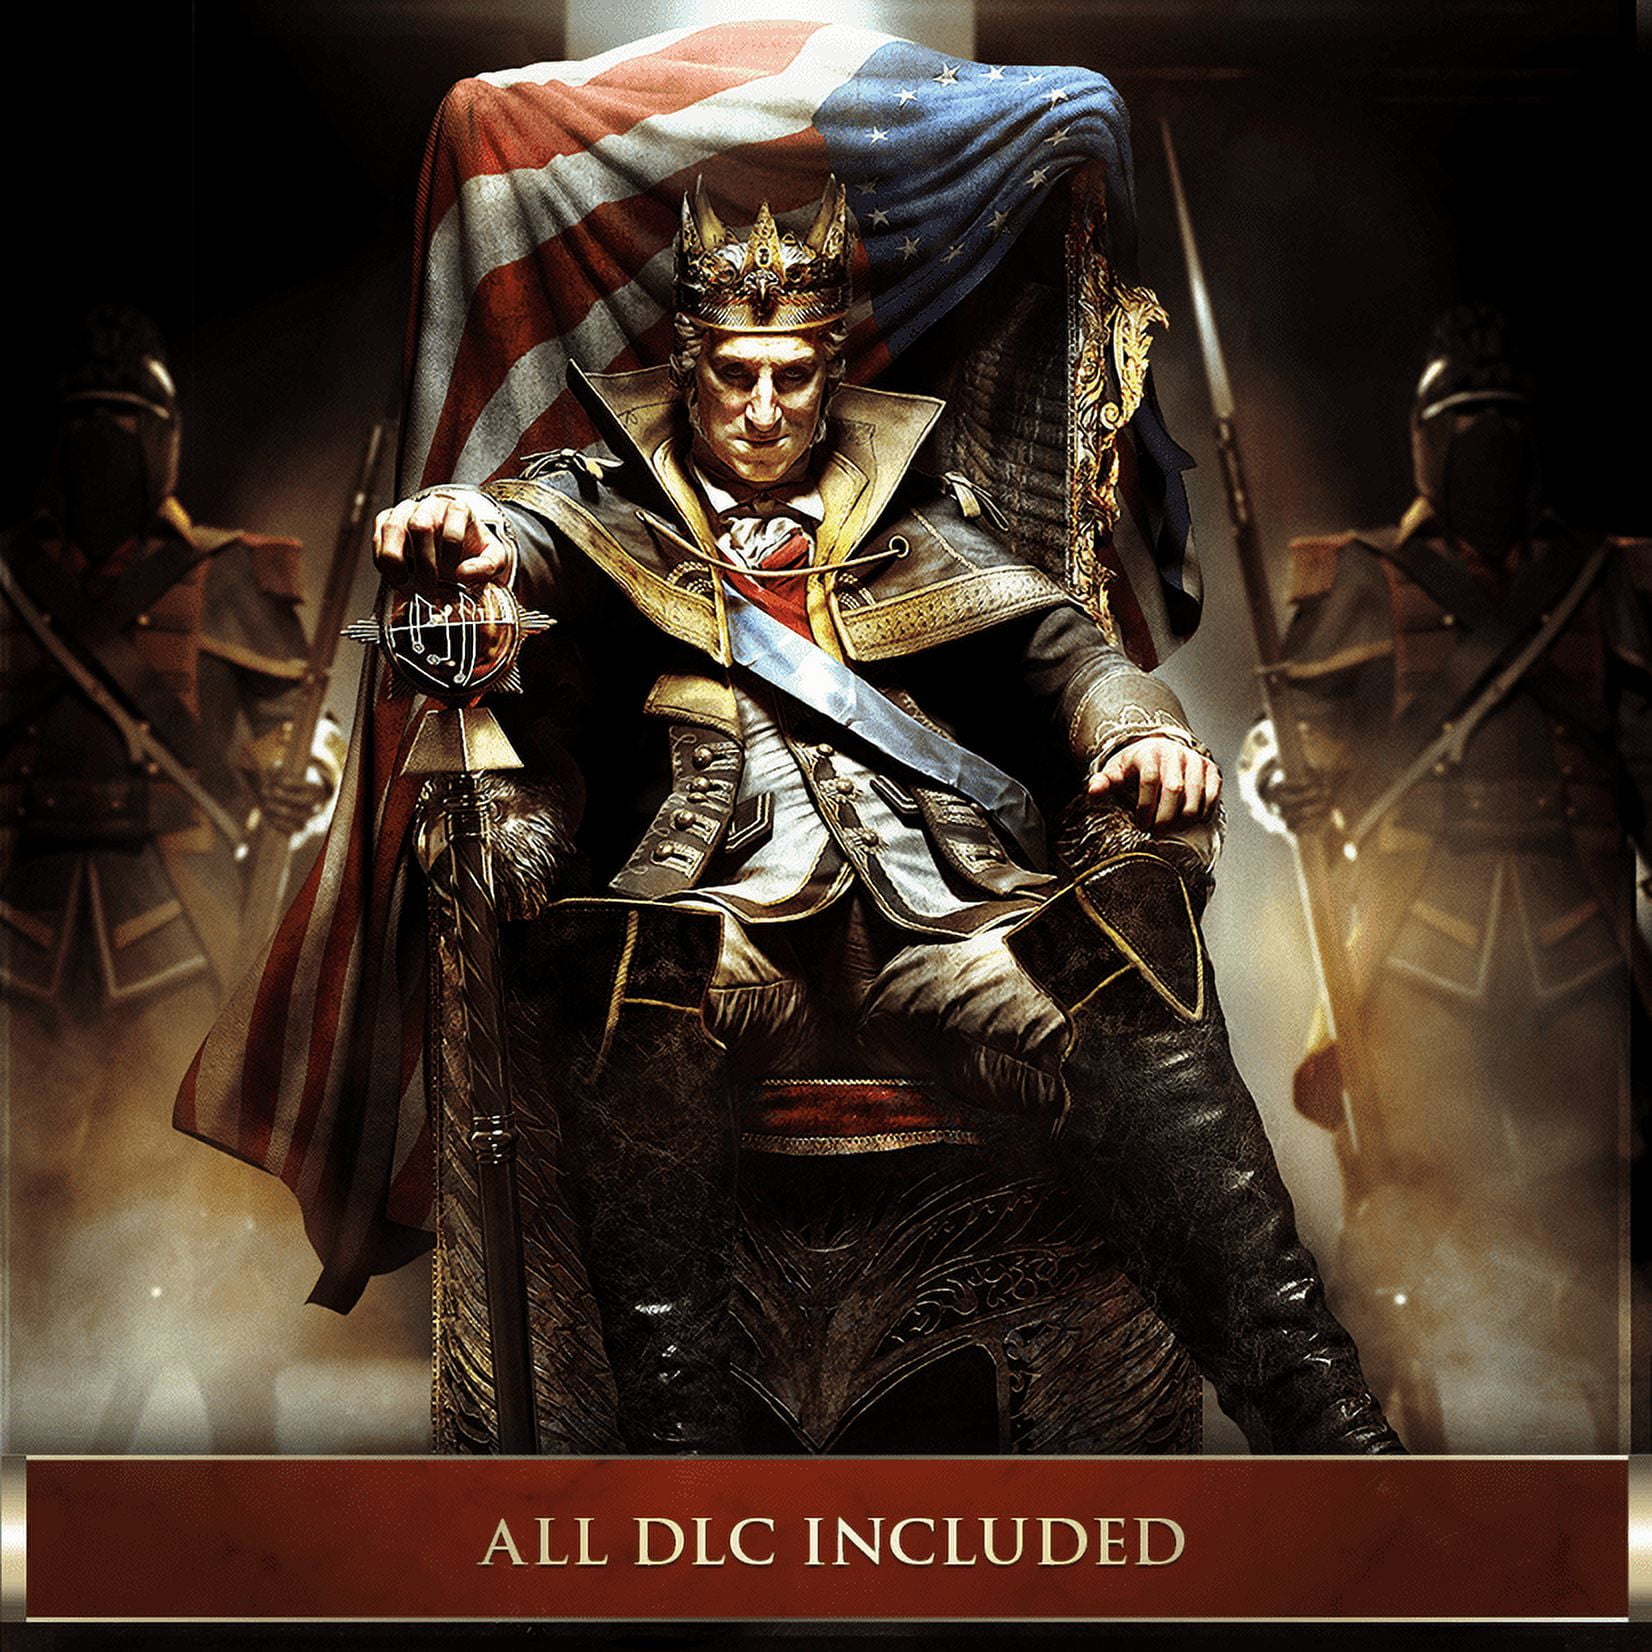 Assassin's Creed III Remastered, Ubisoft, Xbox One, 887256039394 